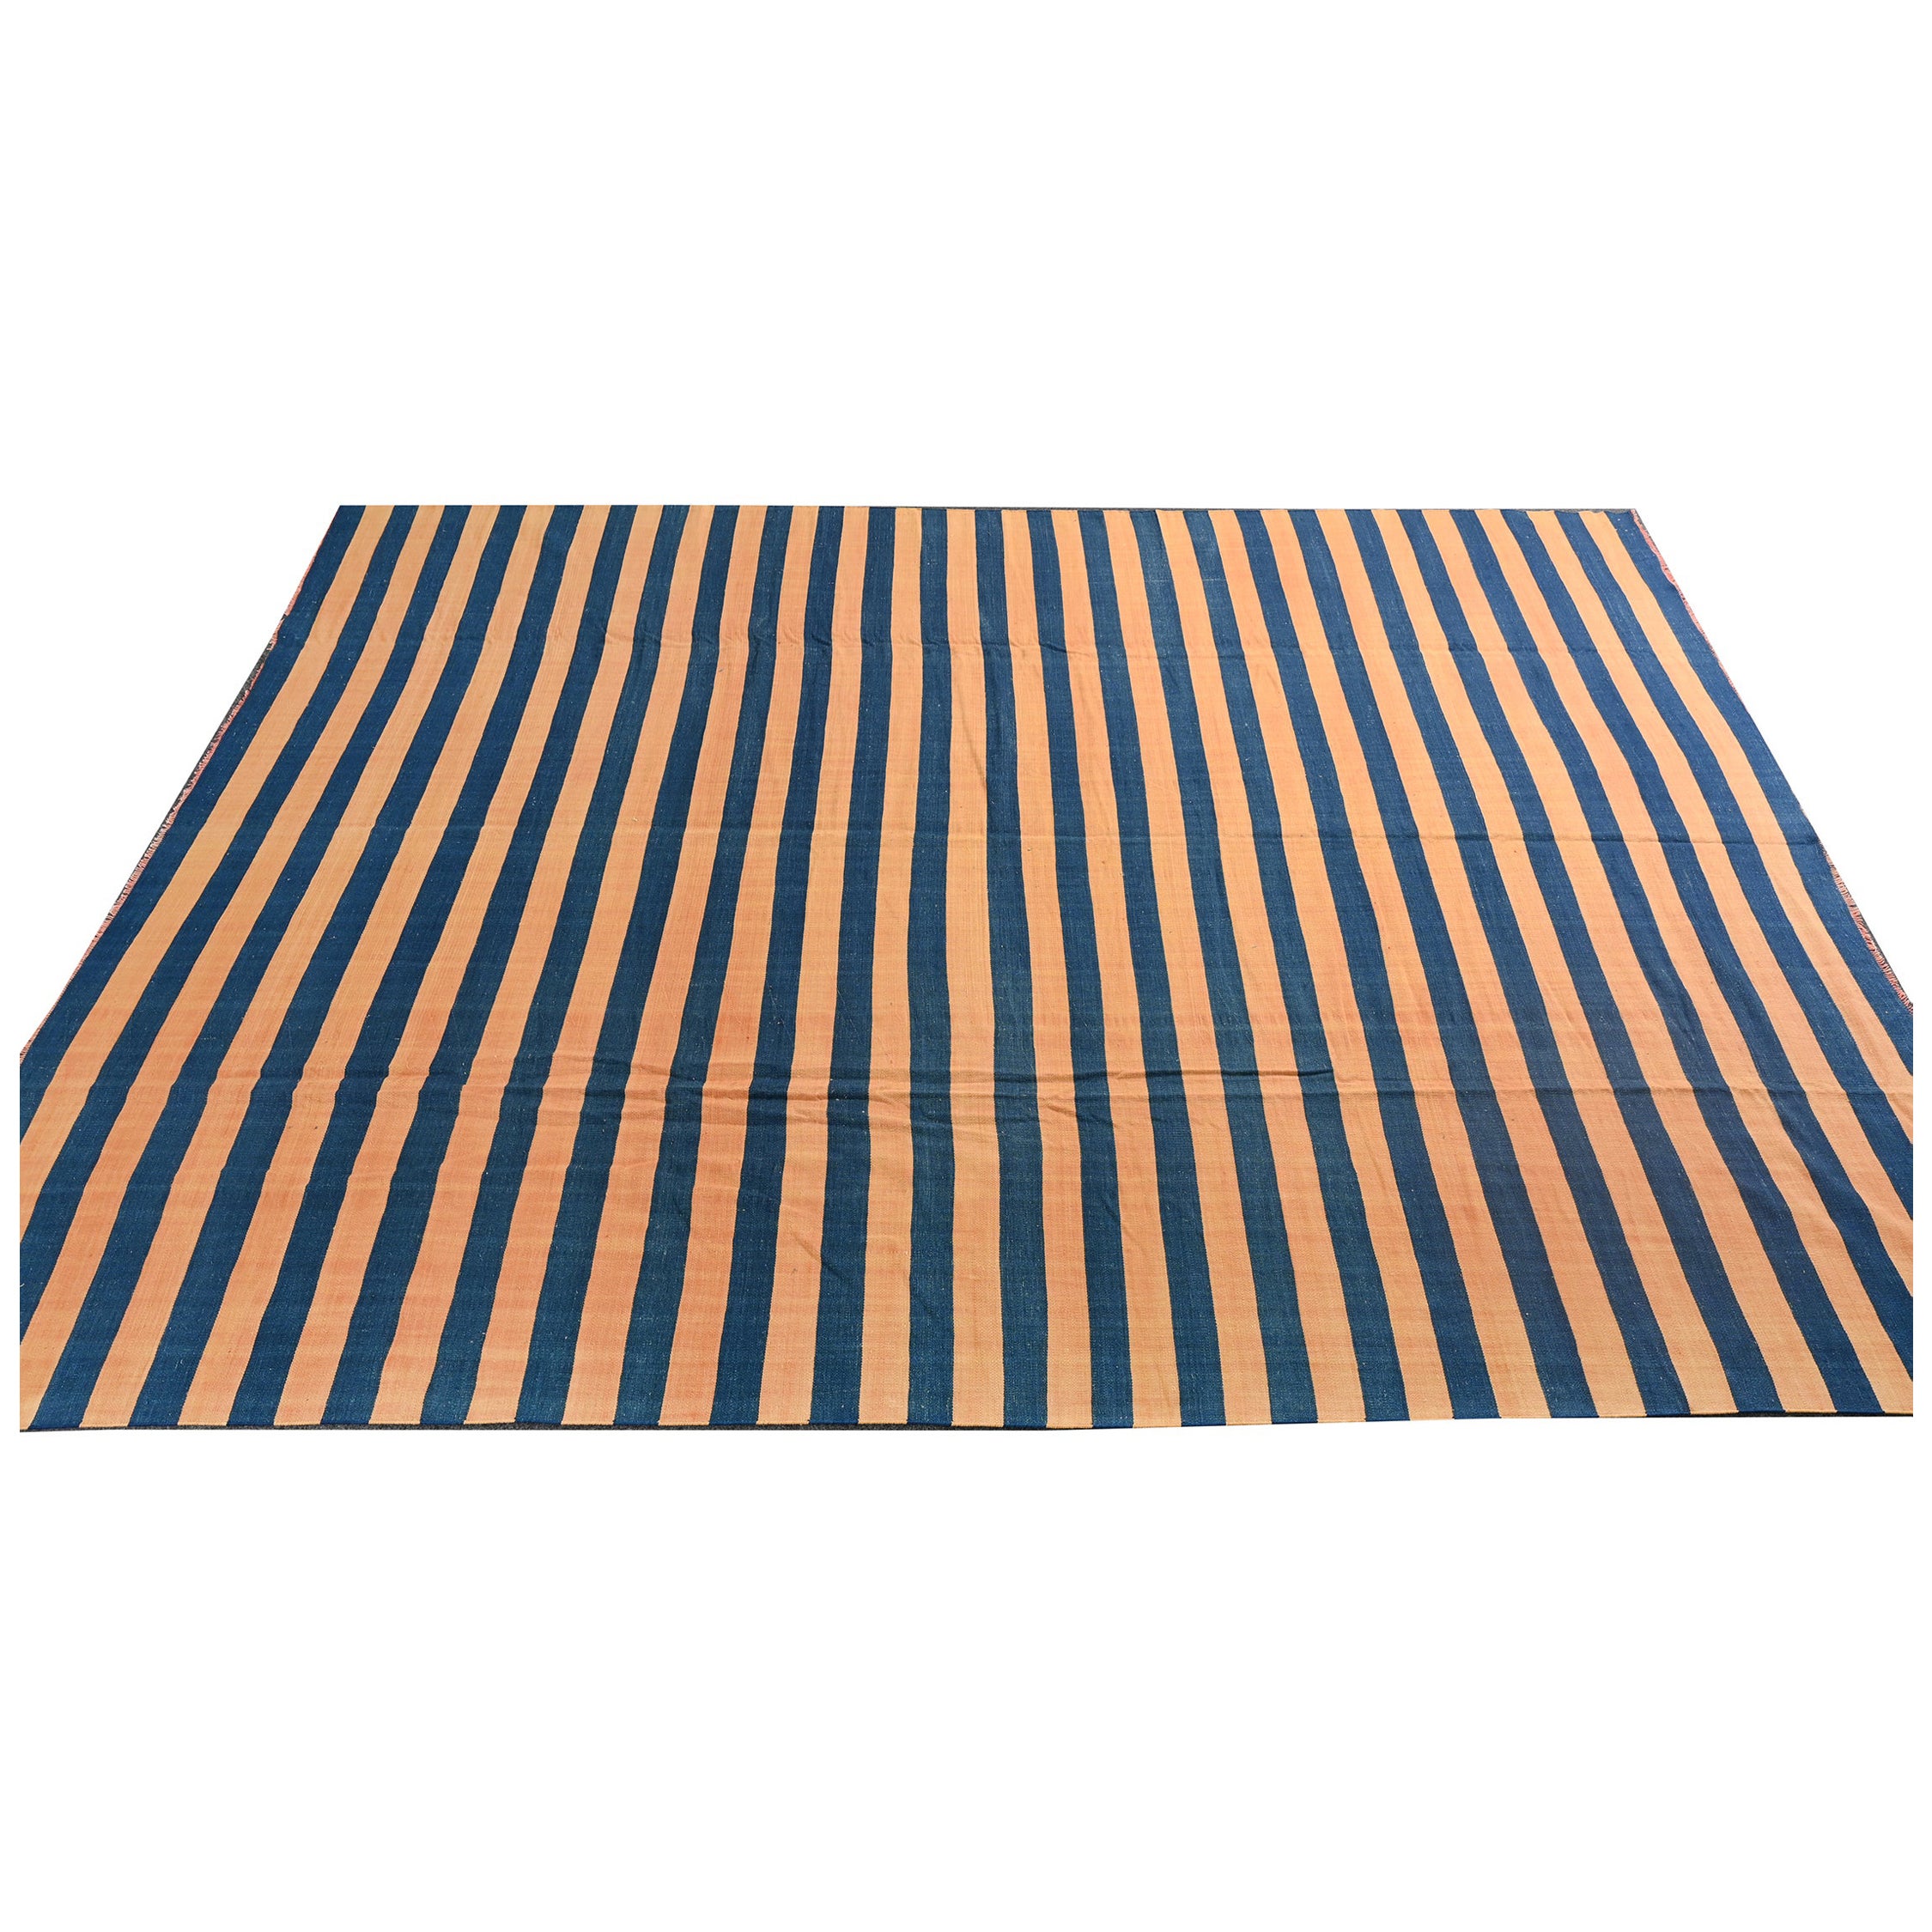 Vintage Dhurrie Flat Weave in Blue and Orange Stripes by Rug & Kilim For Sale